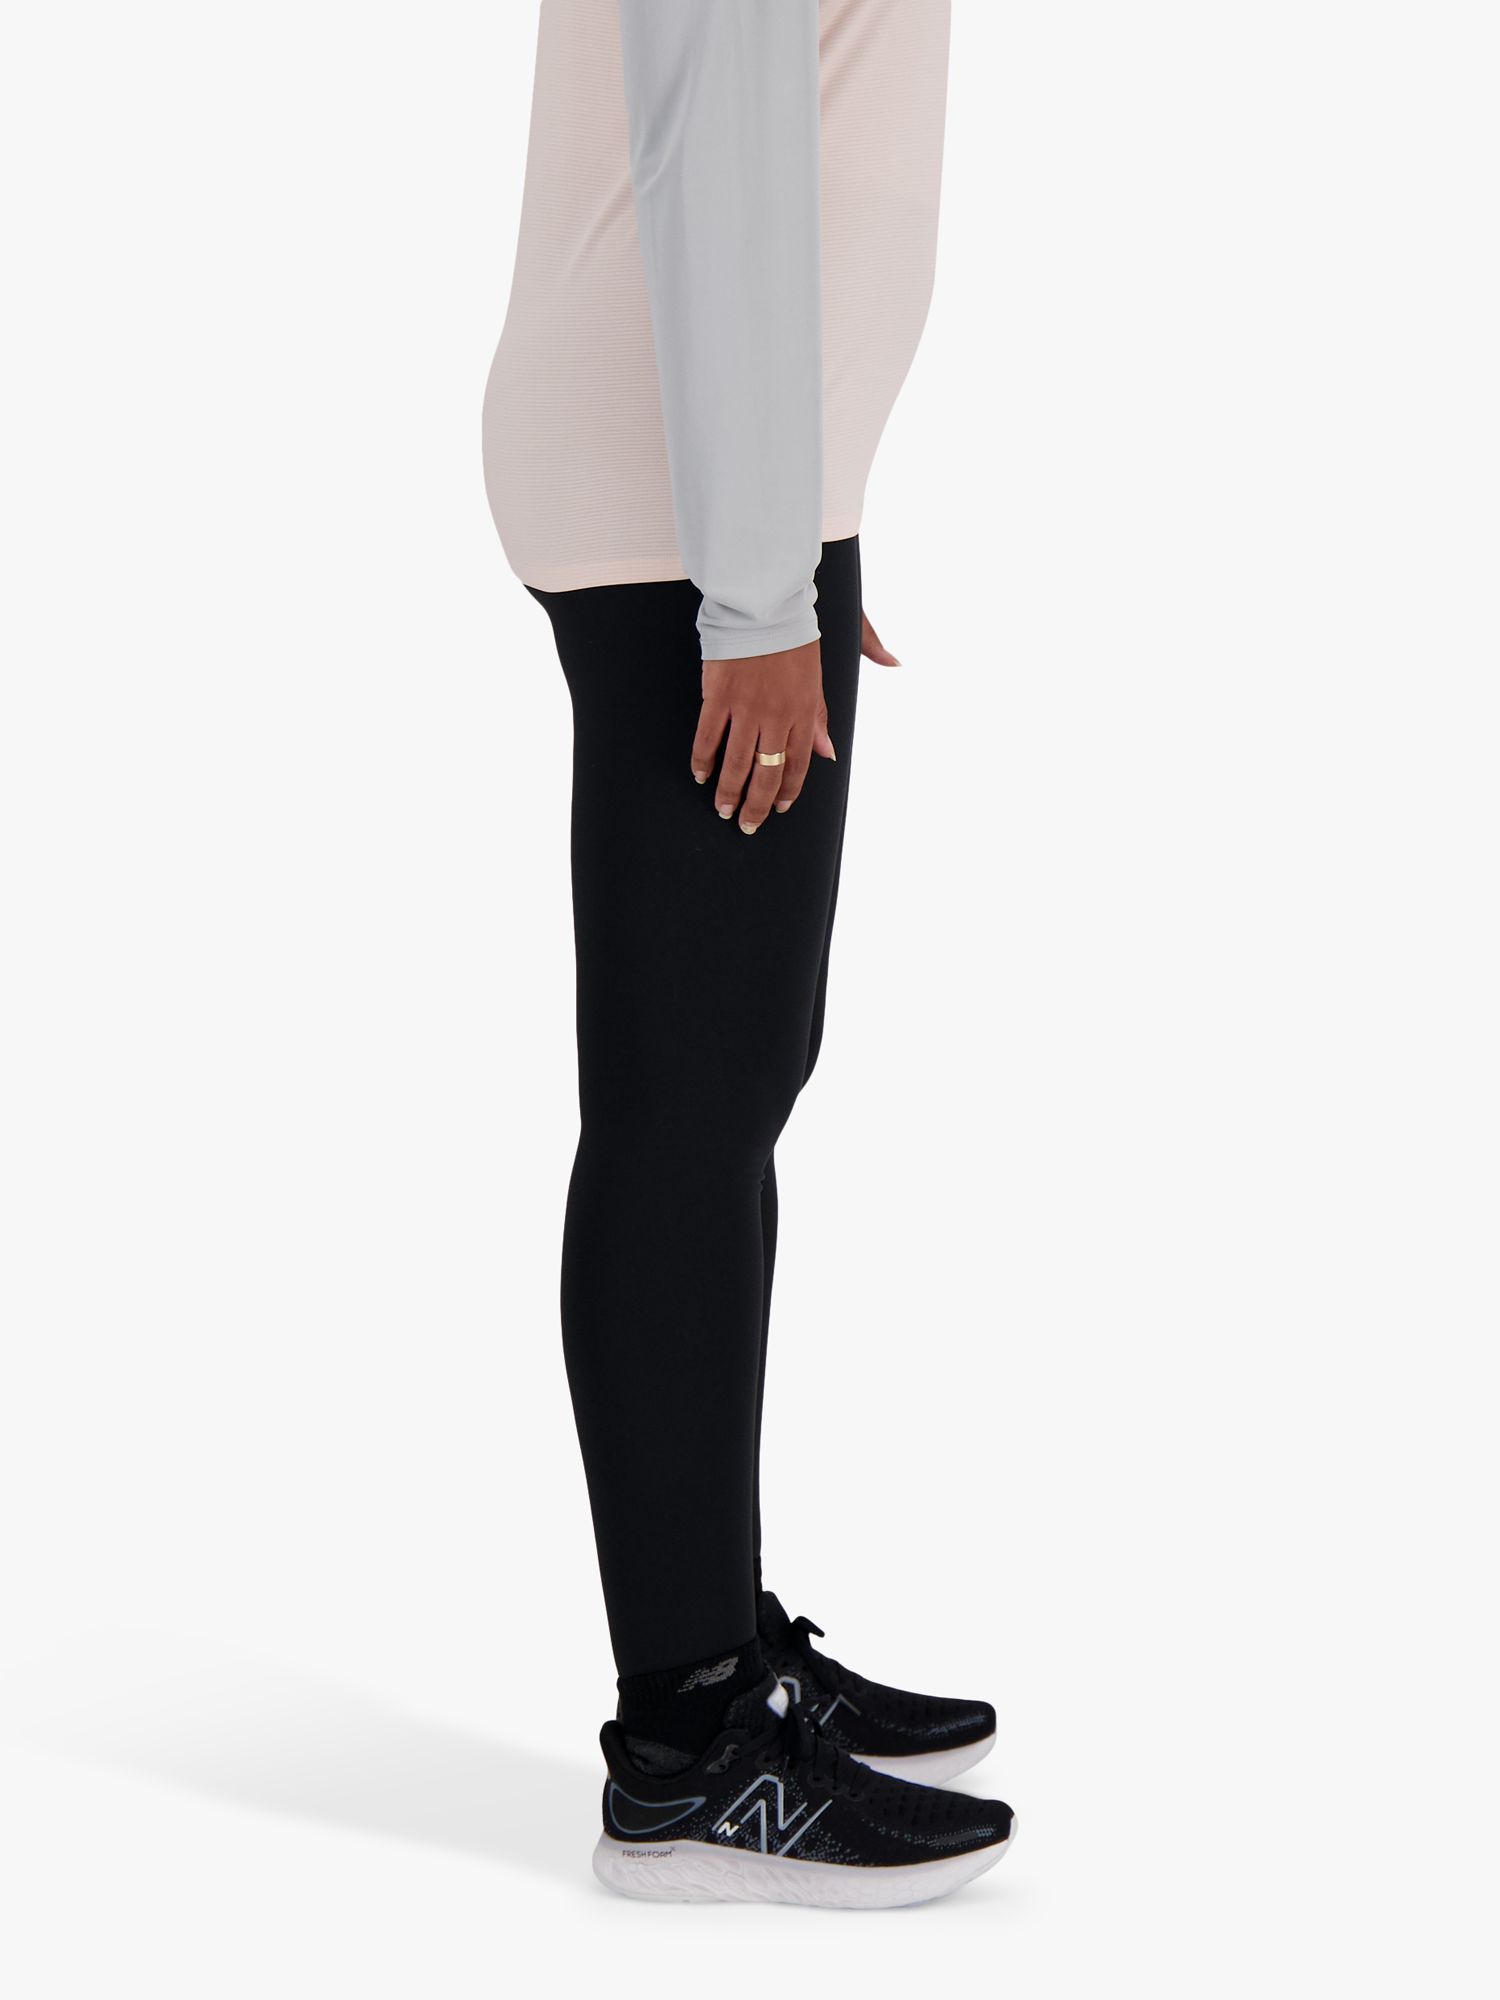 New Balance Women's Everyday Leggings, Black, XS